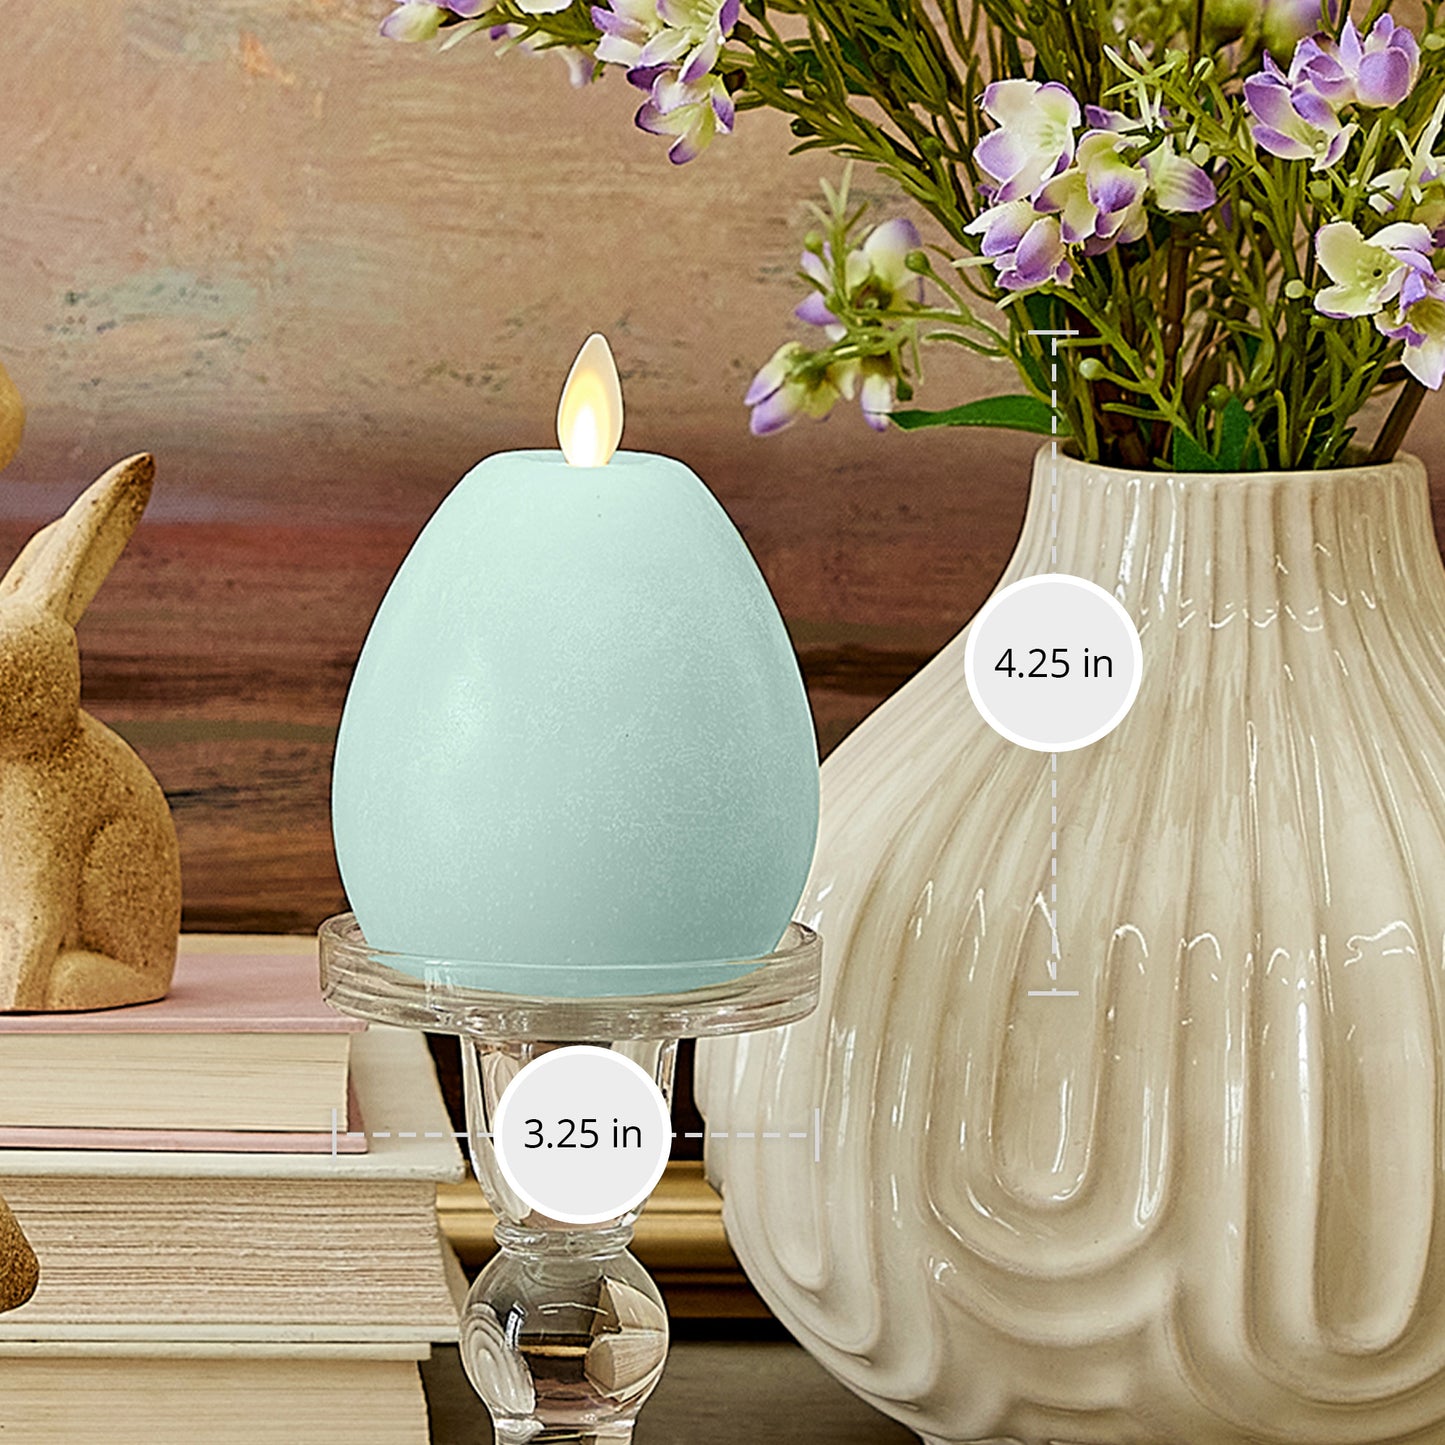 an image of Luminara's Easter egg candles